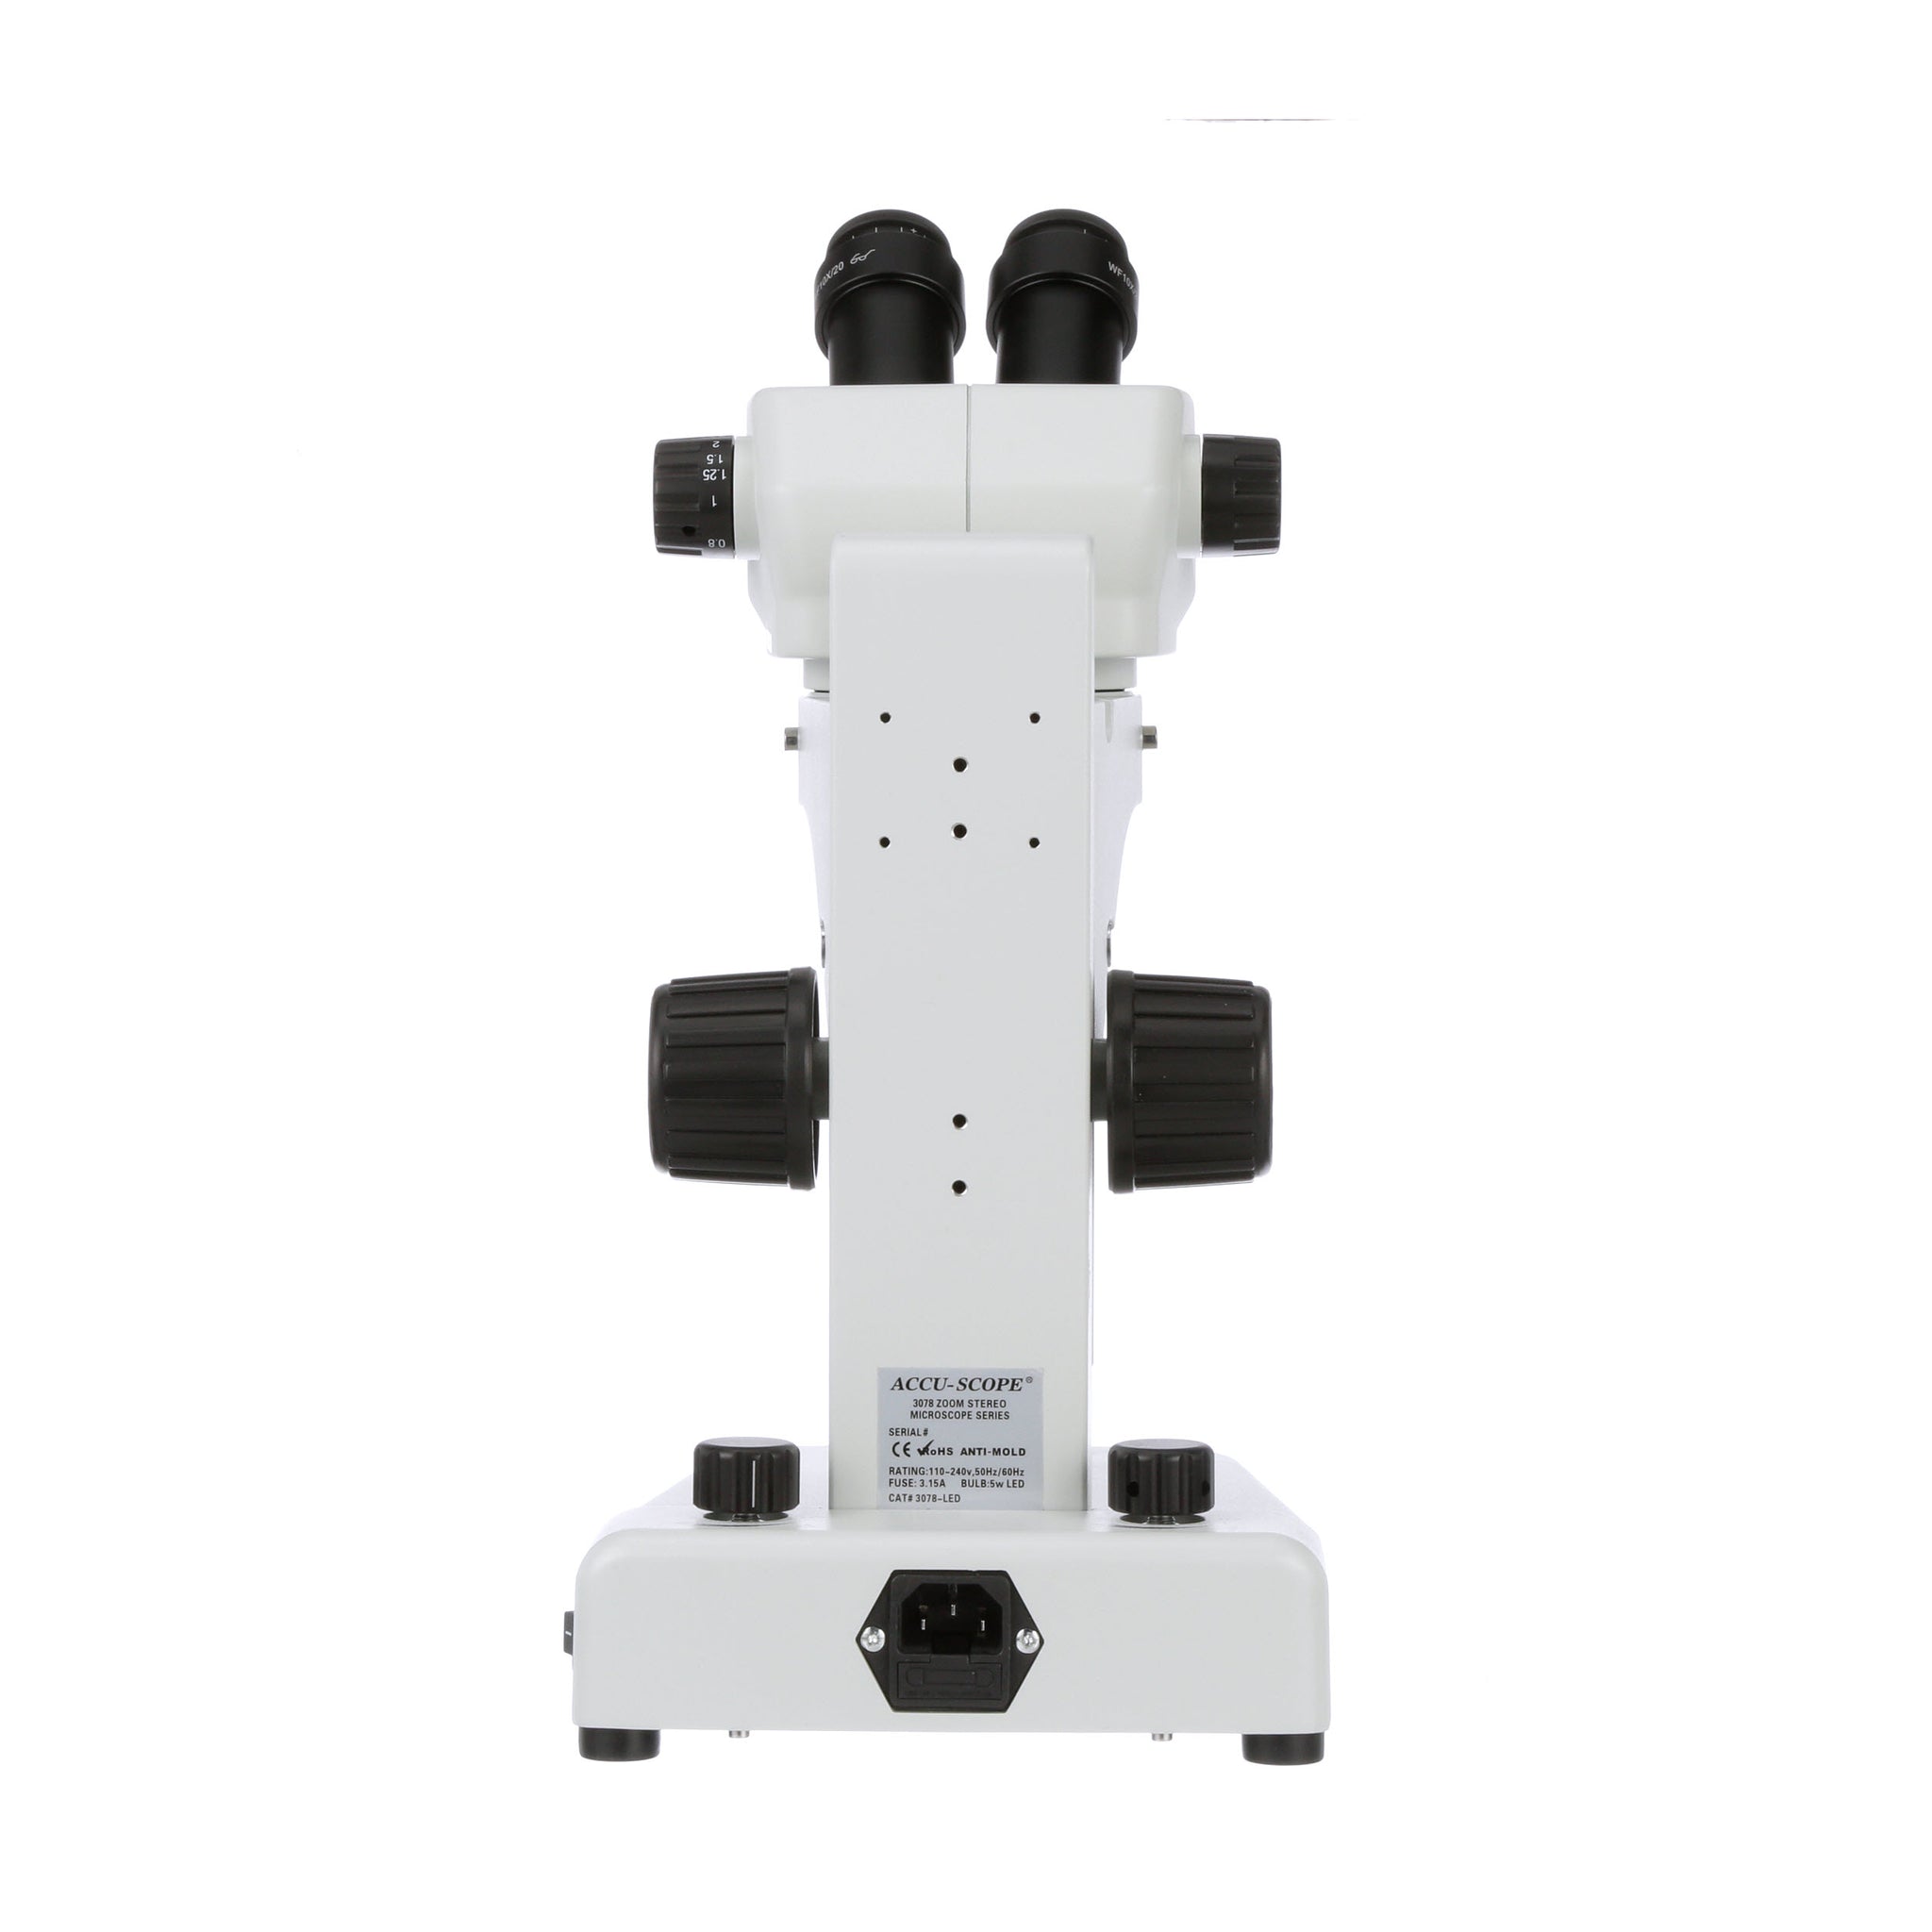 Accu-Scope 3078 Zoom Stereo Microscope on LED Stand - 8x-35x